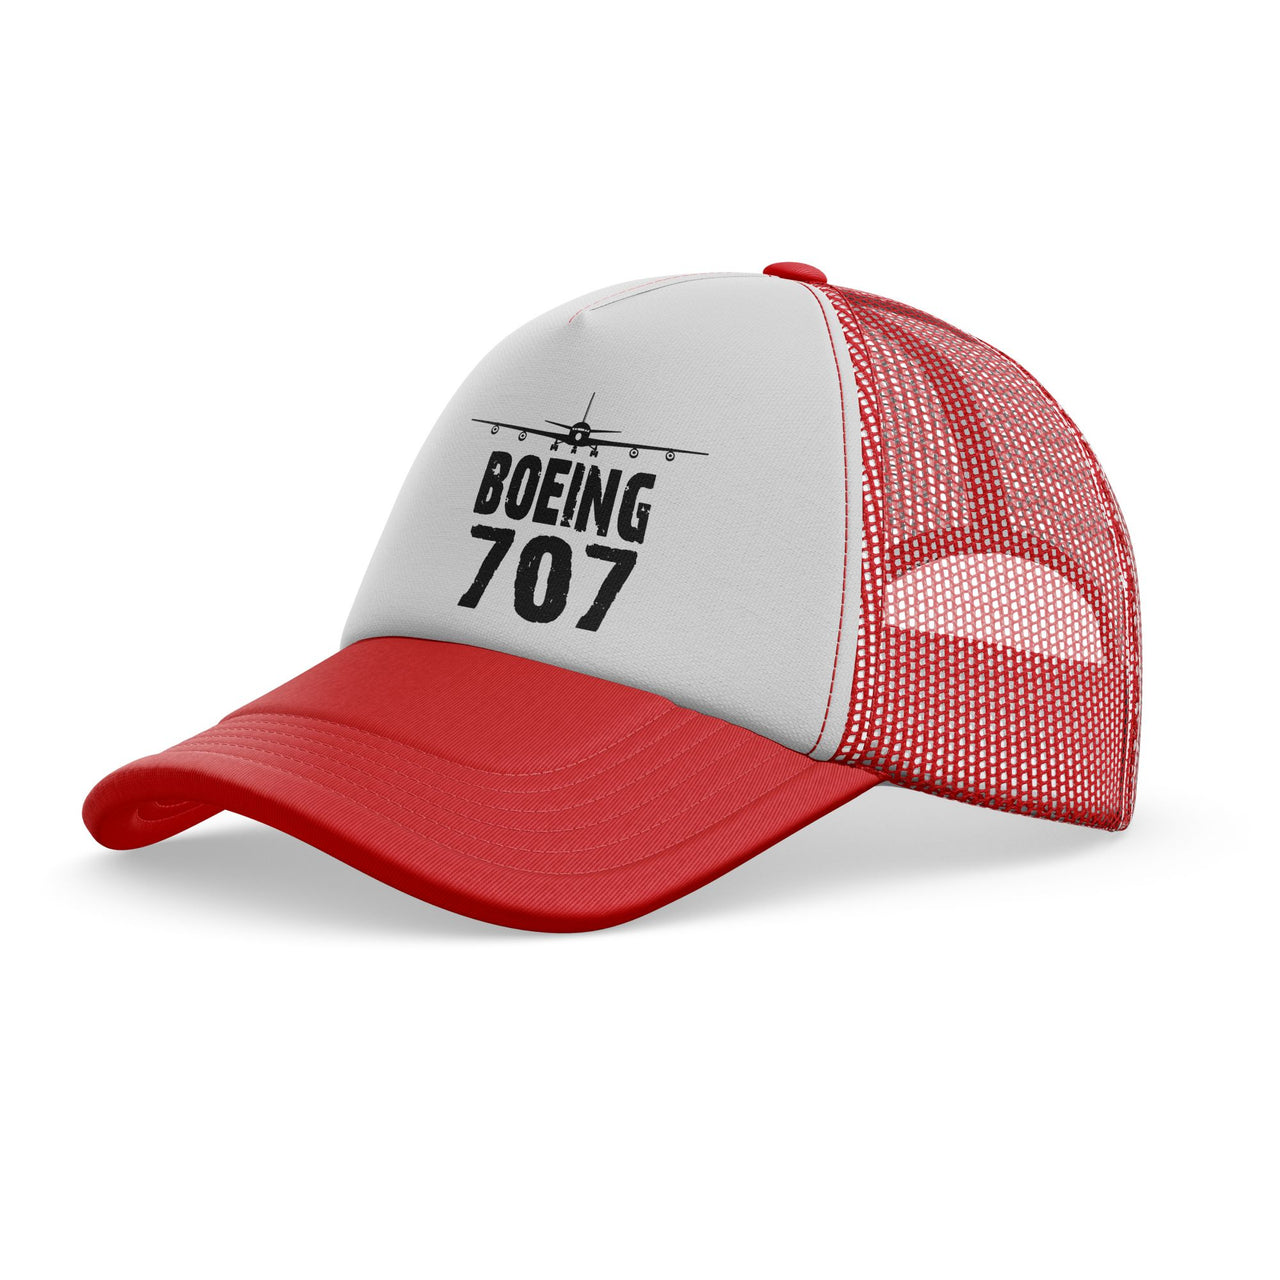 Boeing 707 & Plane Designed Trucker Caps & Hats